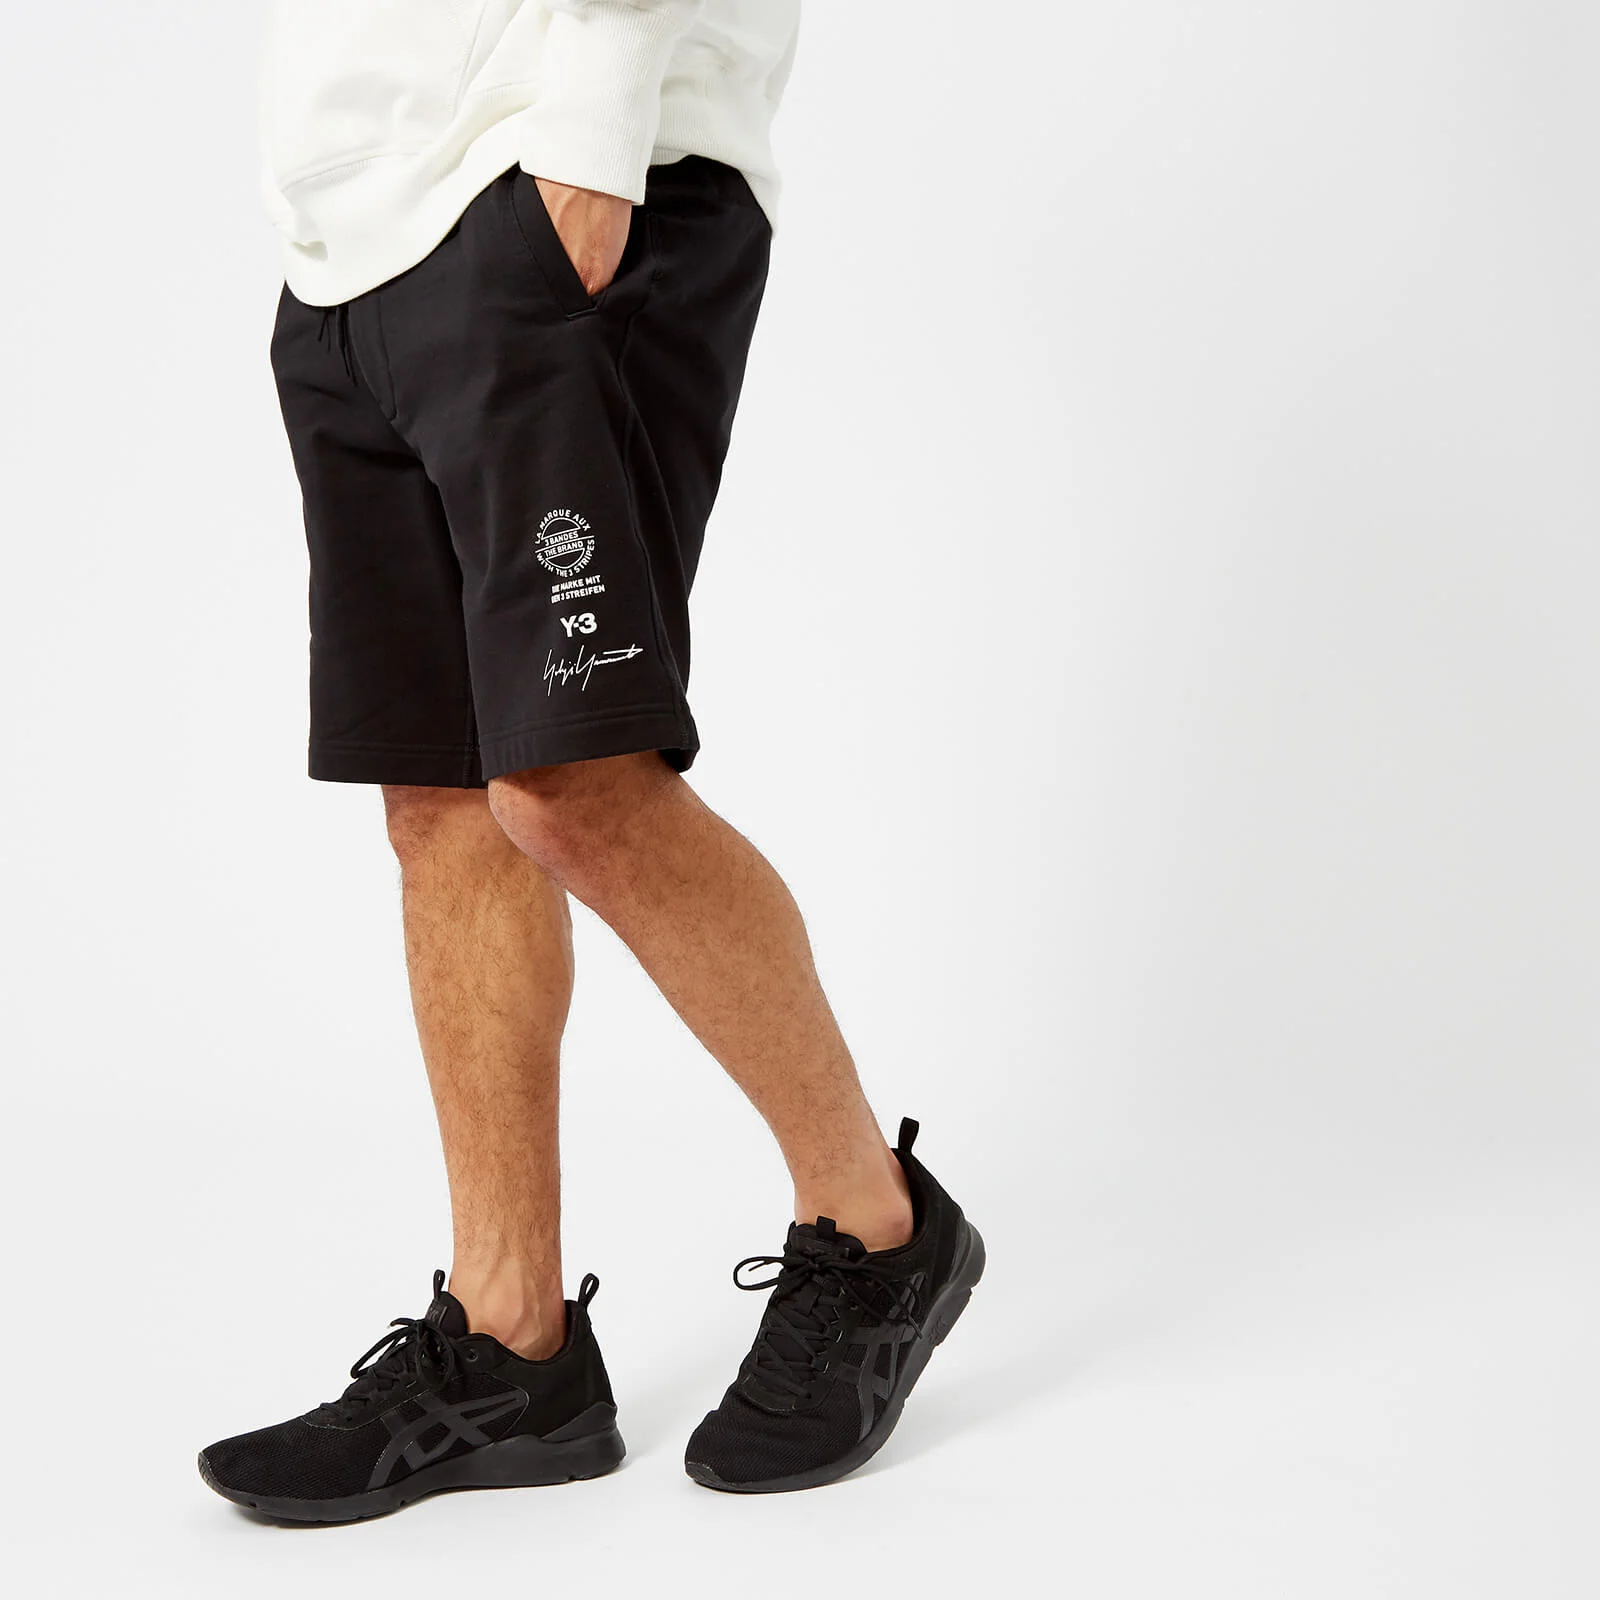 Y-3 Men's Street Shorts - Black Image 1